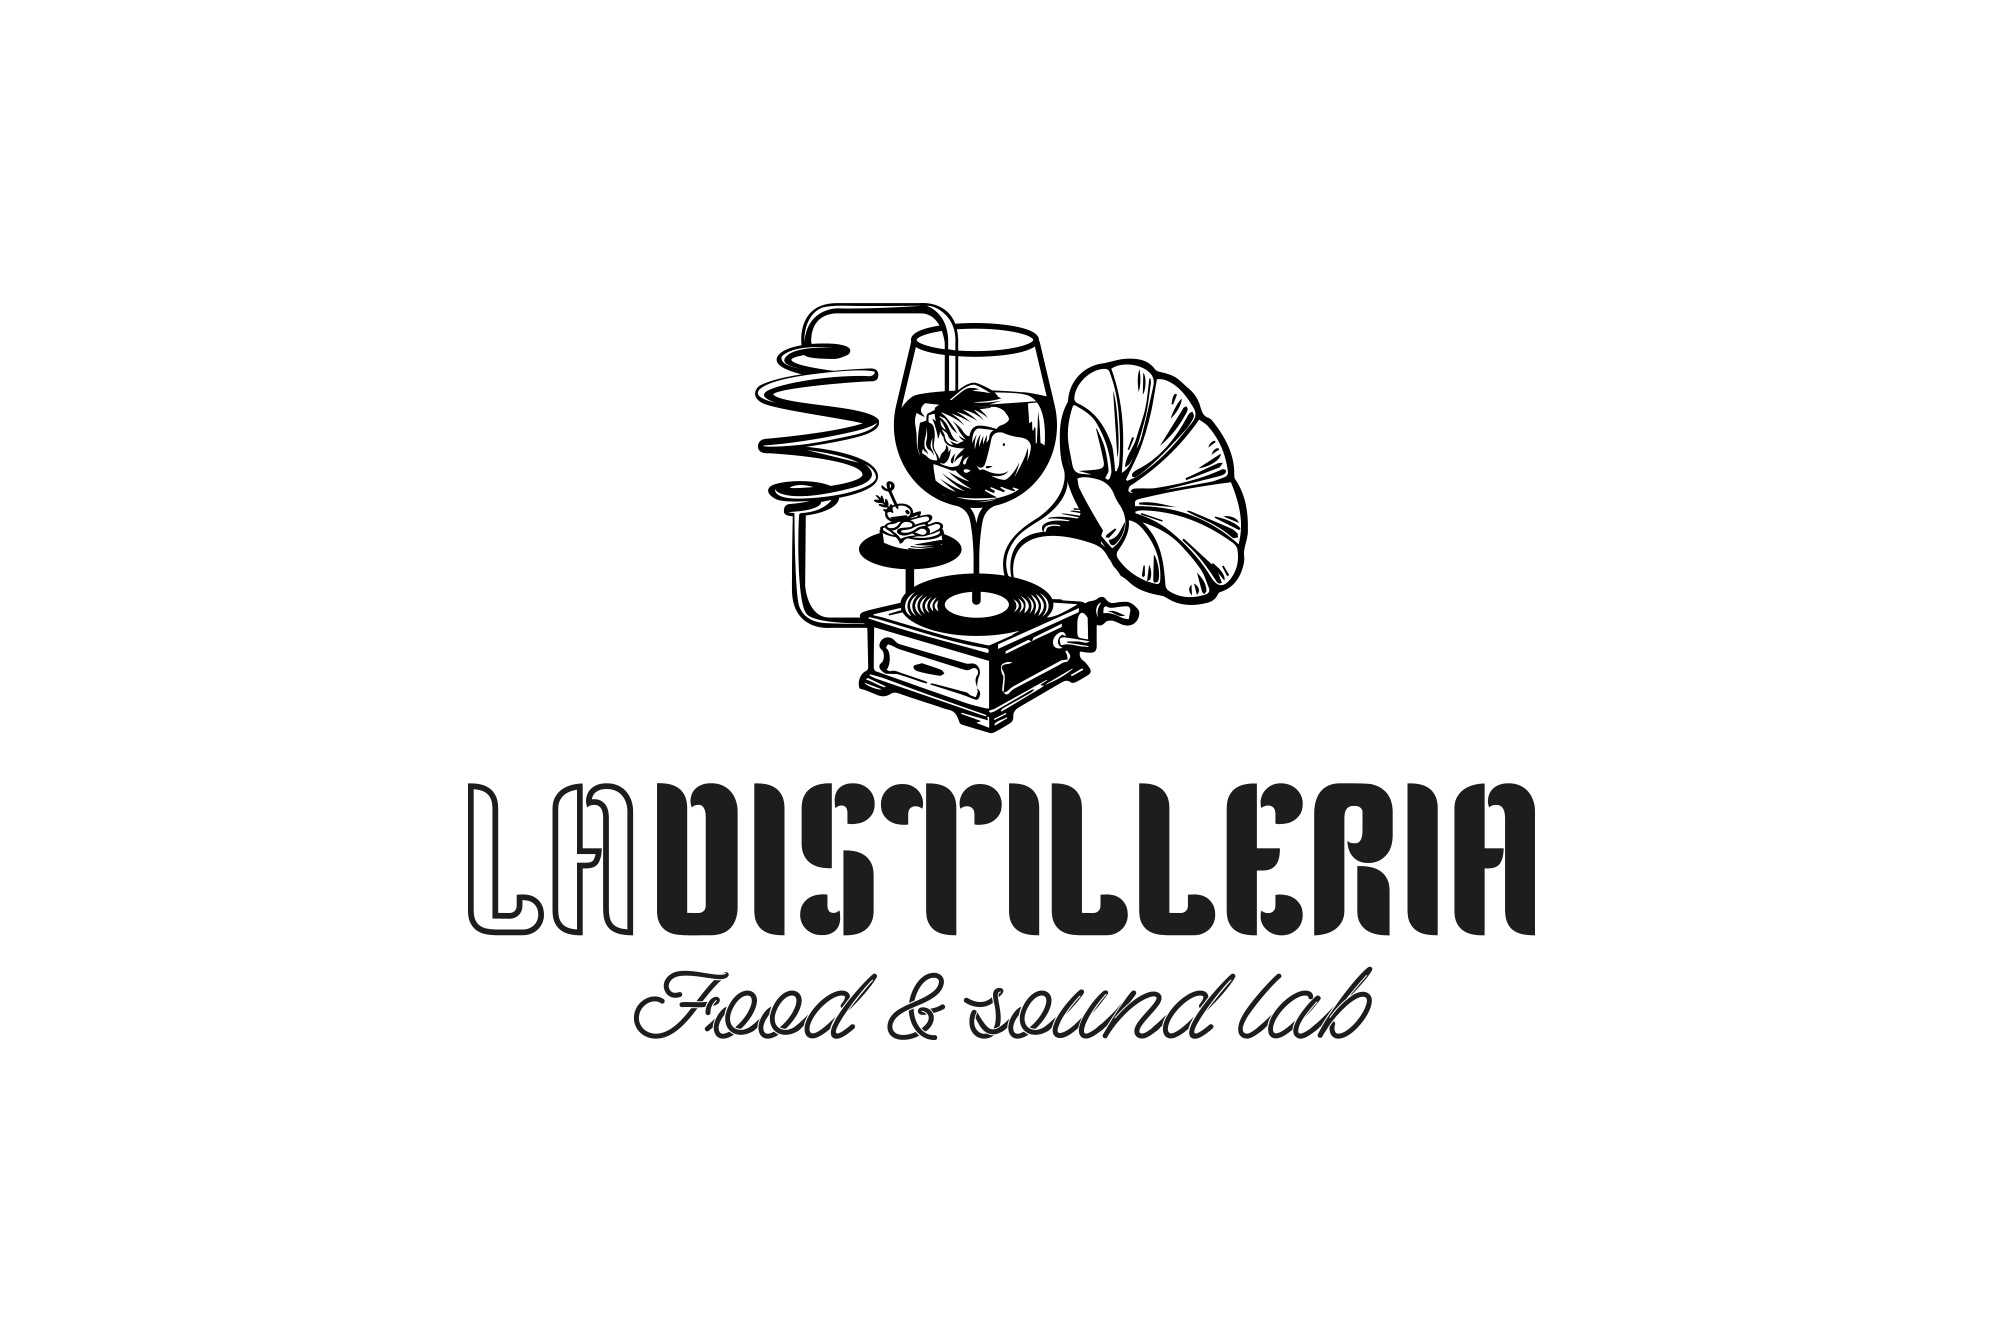 La Distilleria - Food & Sound Lab - logo, branding - img 1